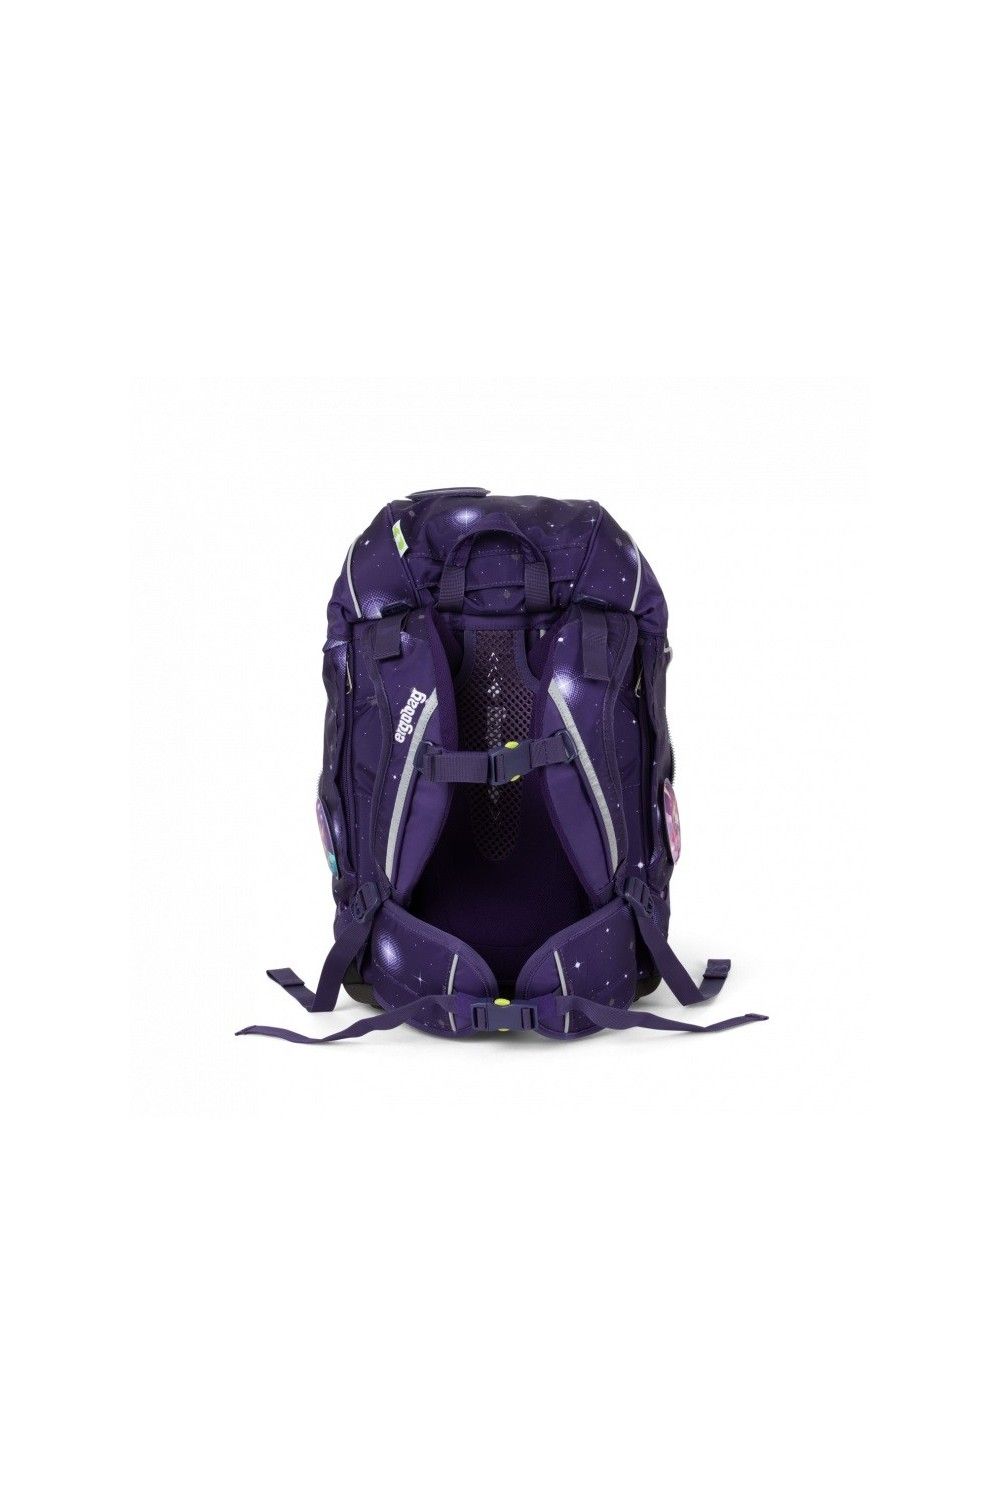 ergobag pack school backpack set 6 pieces Galaxy Edition Baergasus